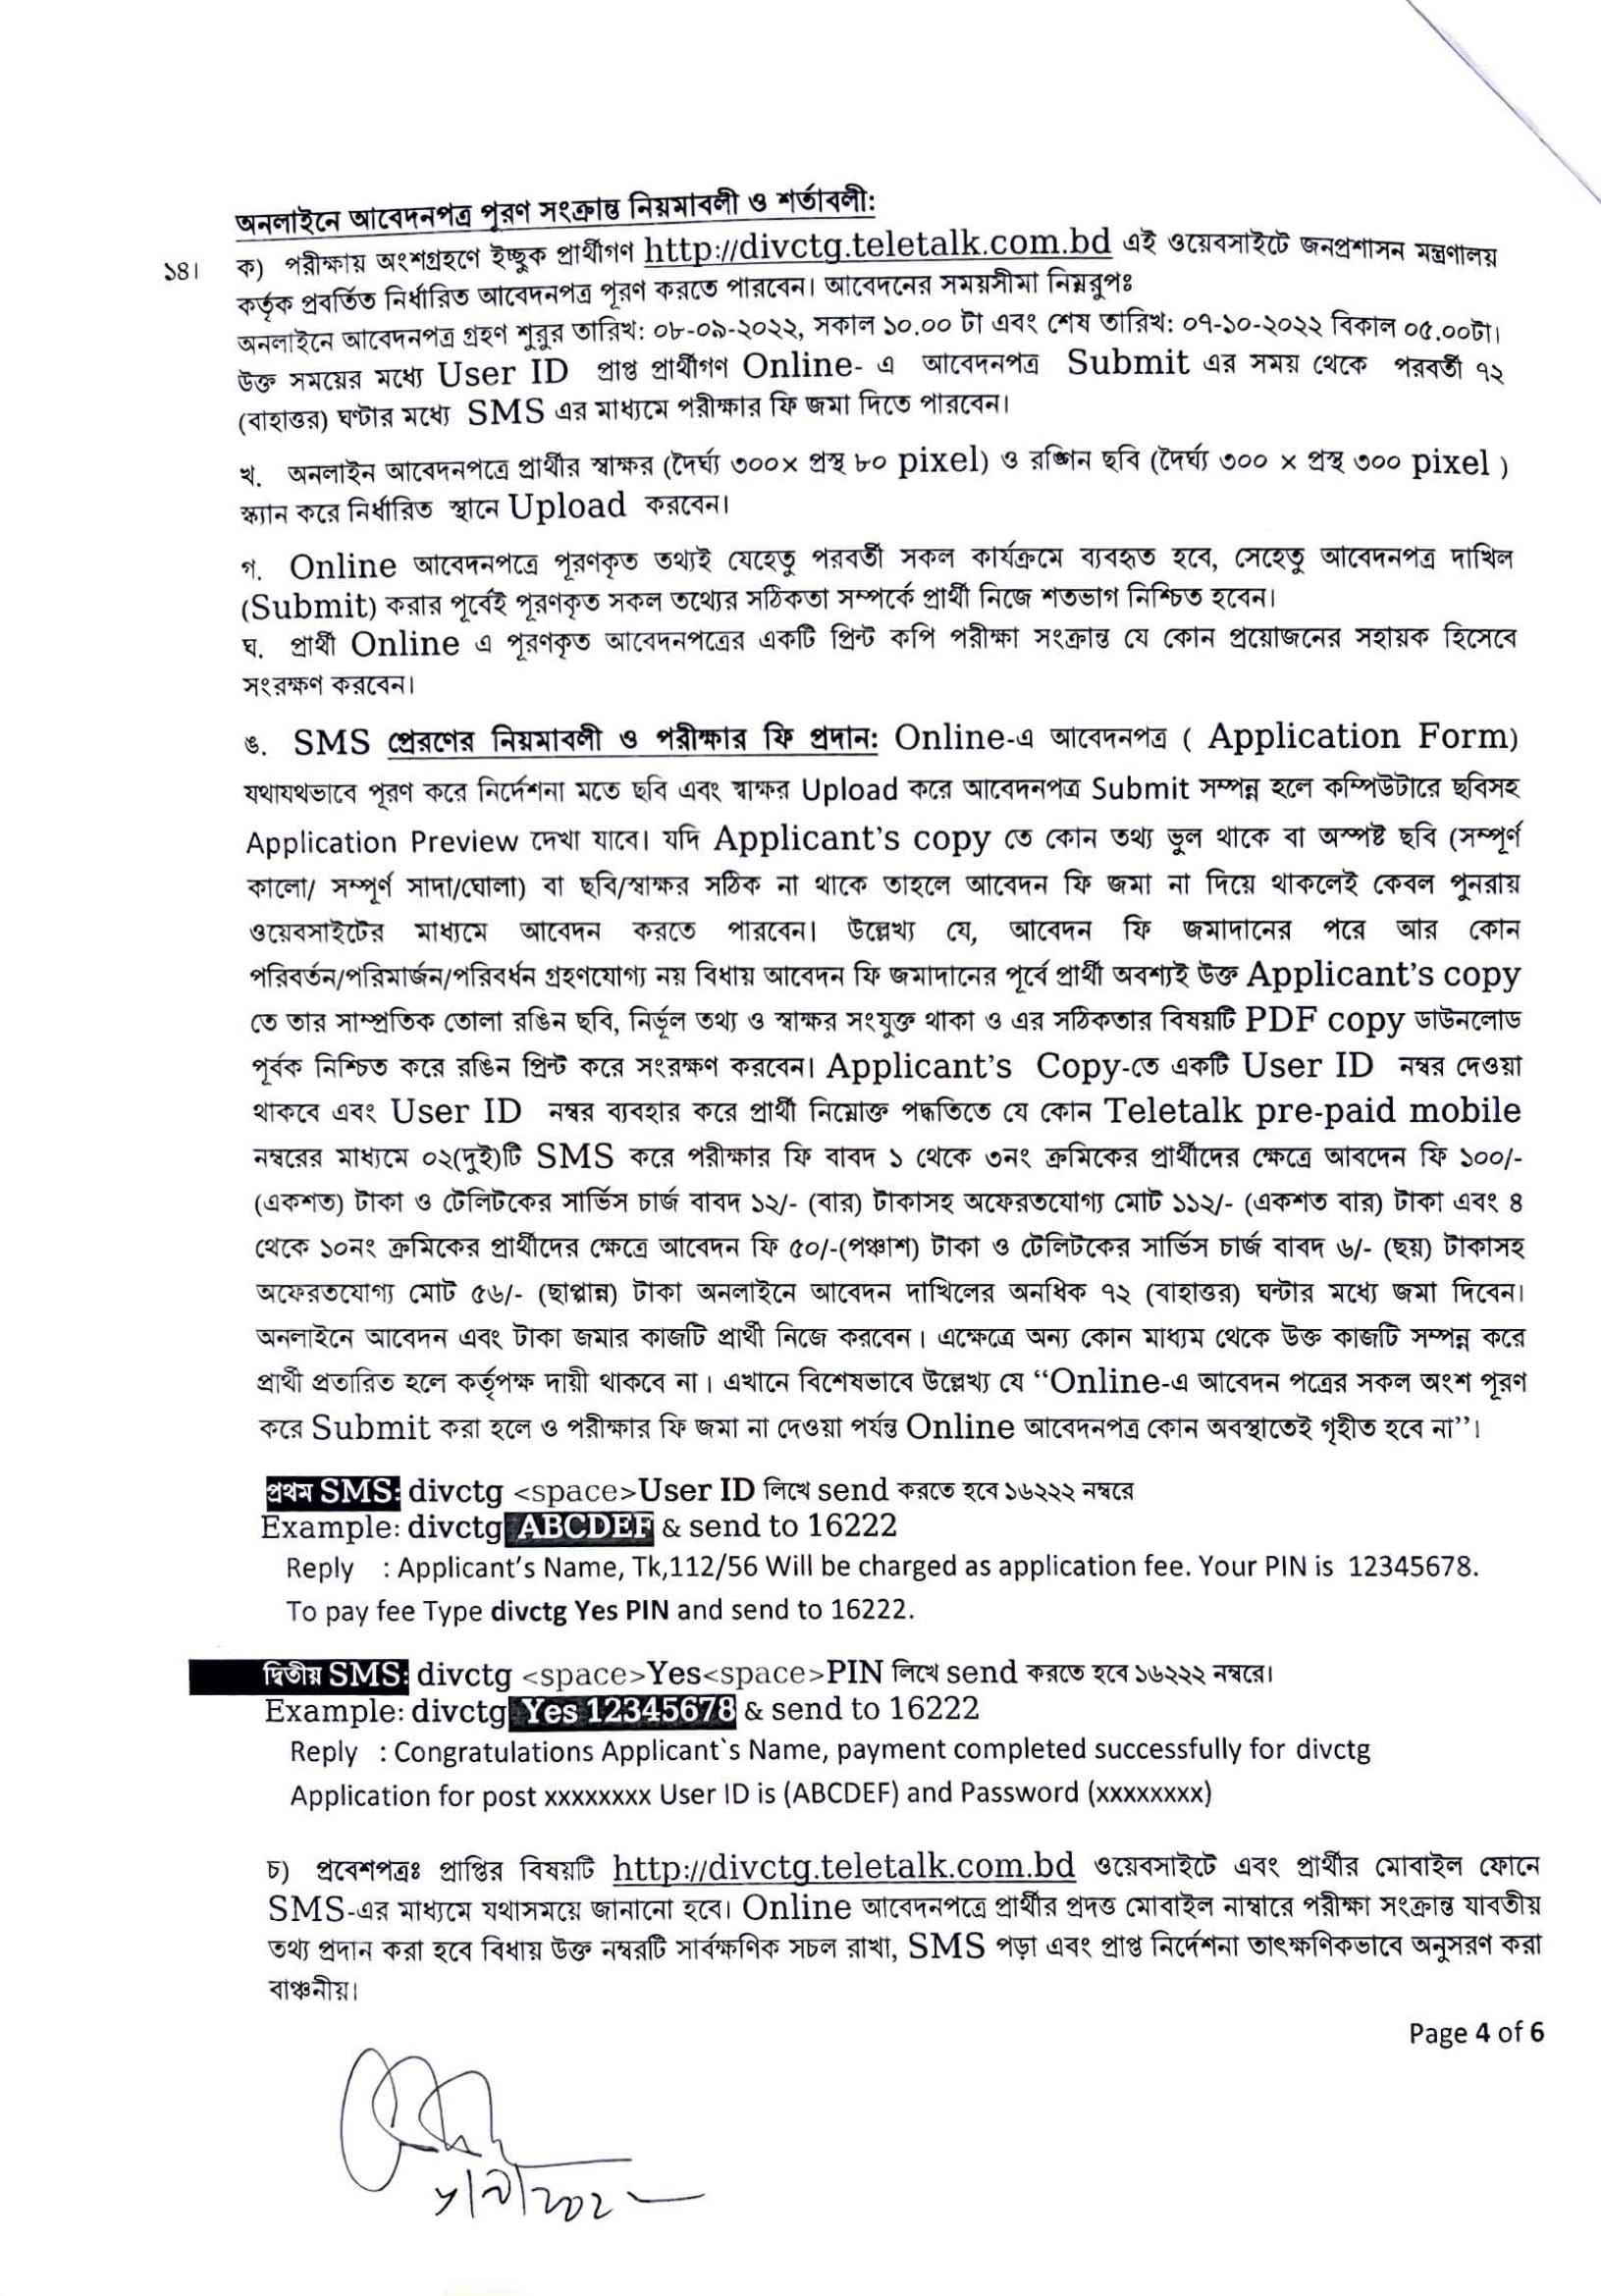 Chittagong Divisional Commissioner Office Job Circular 2022